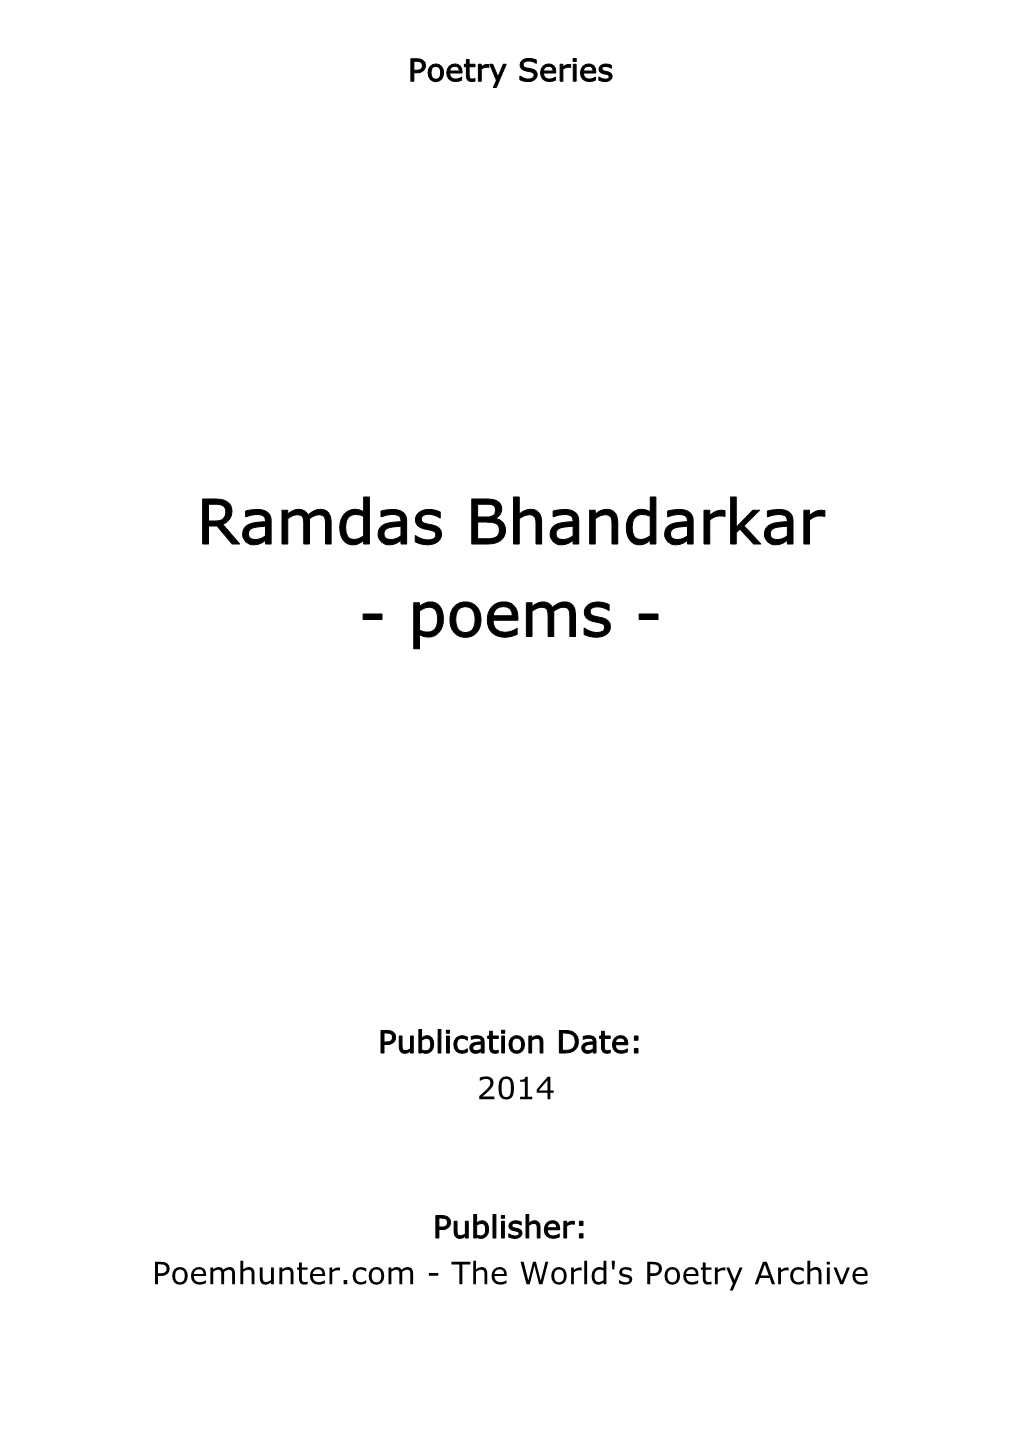 Ramdas Bhandarkar - Poems